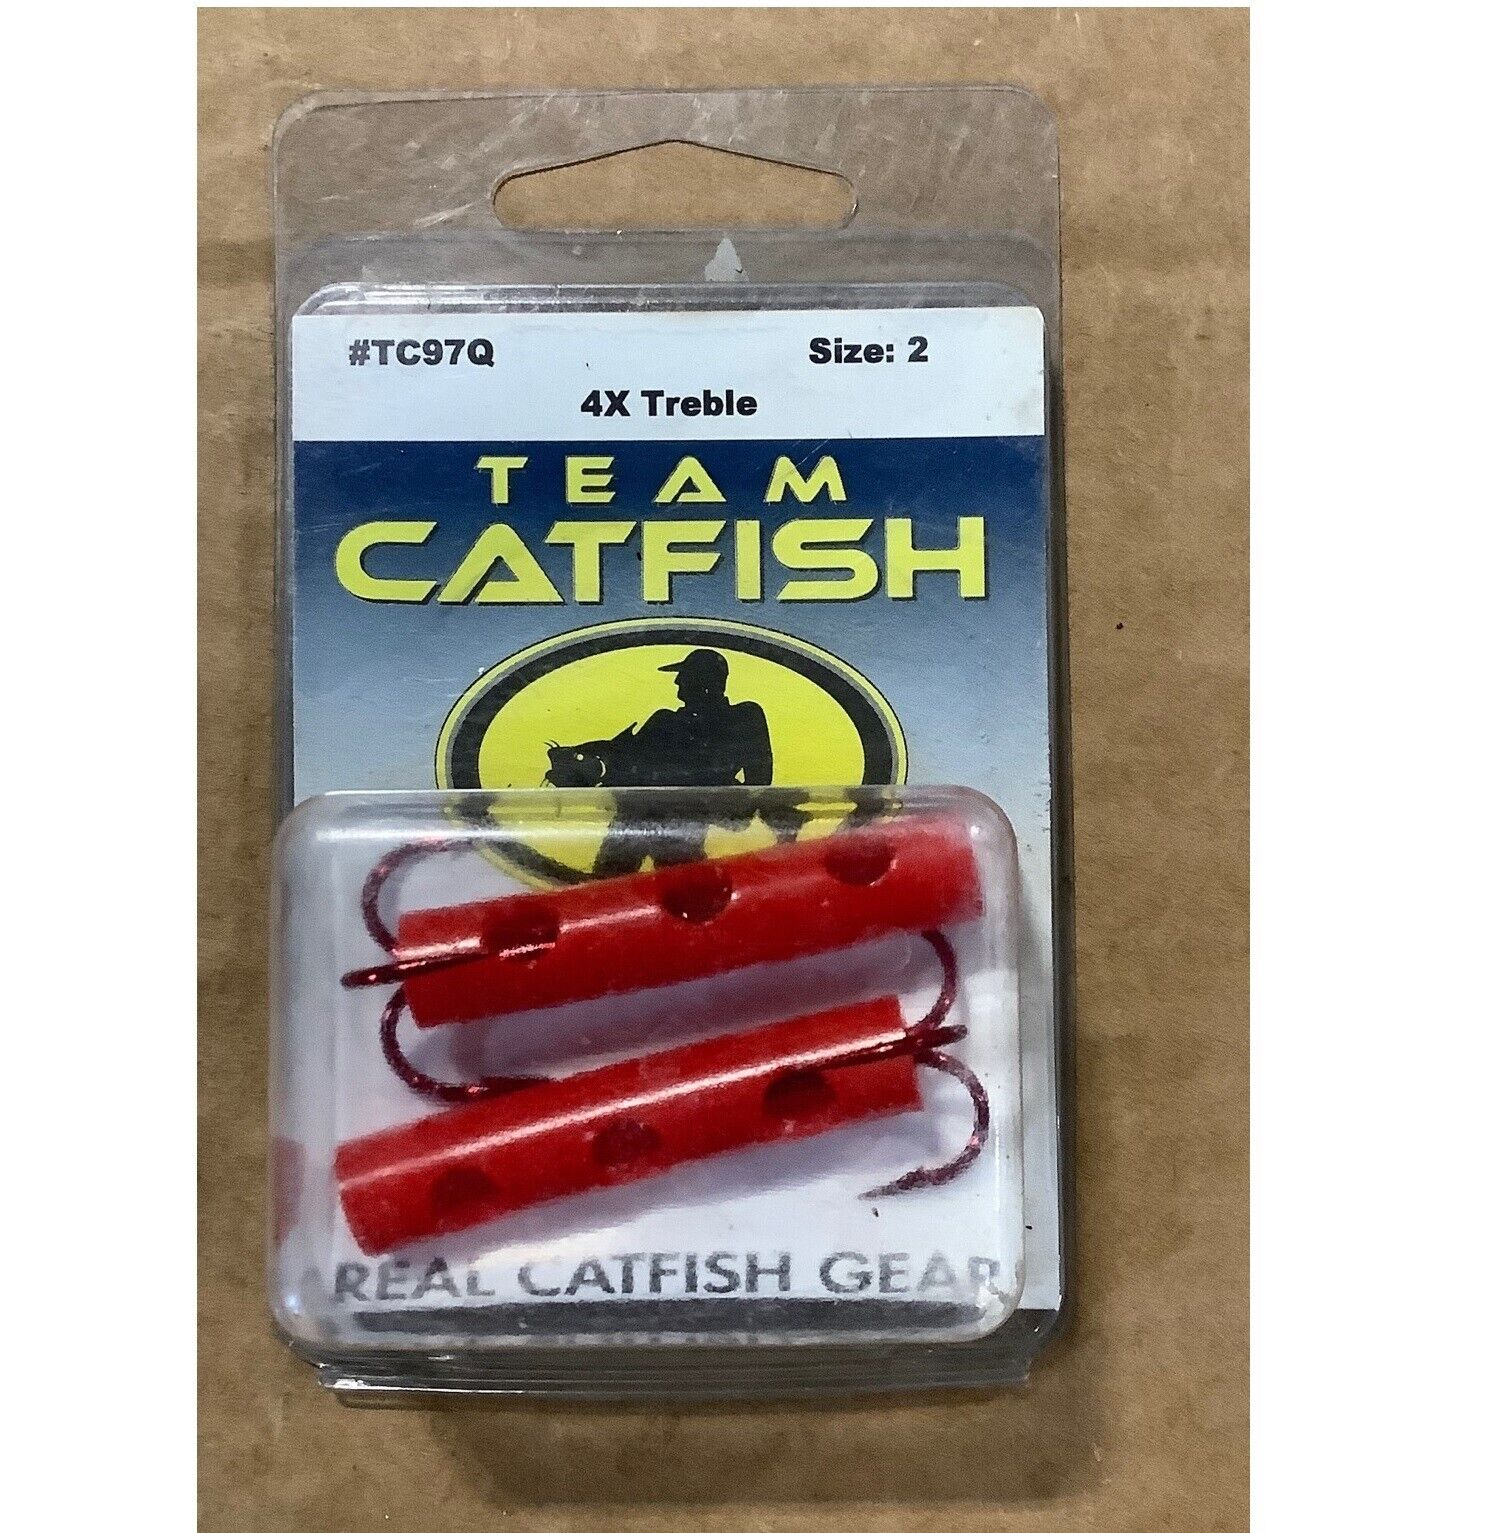 Team Catfish TC97Q Real Catfish Gear, 4X Treble, Size 2